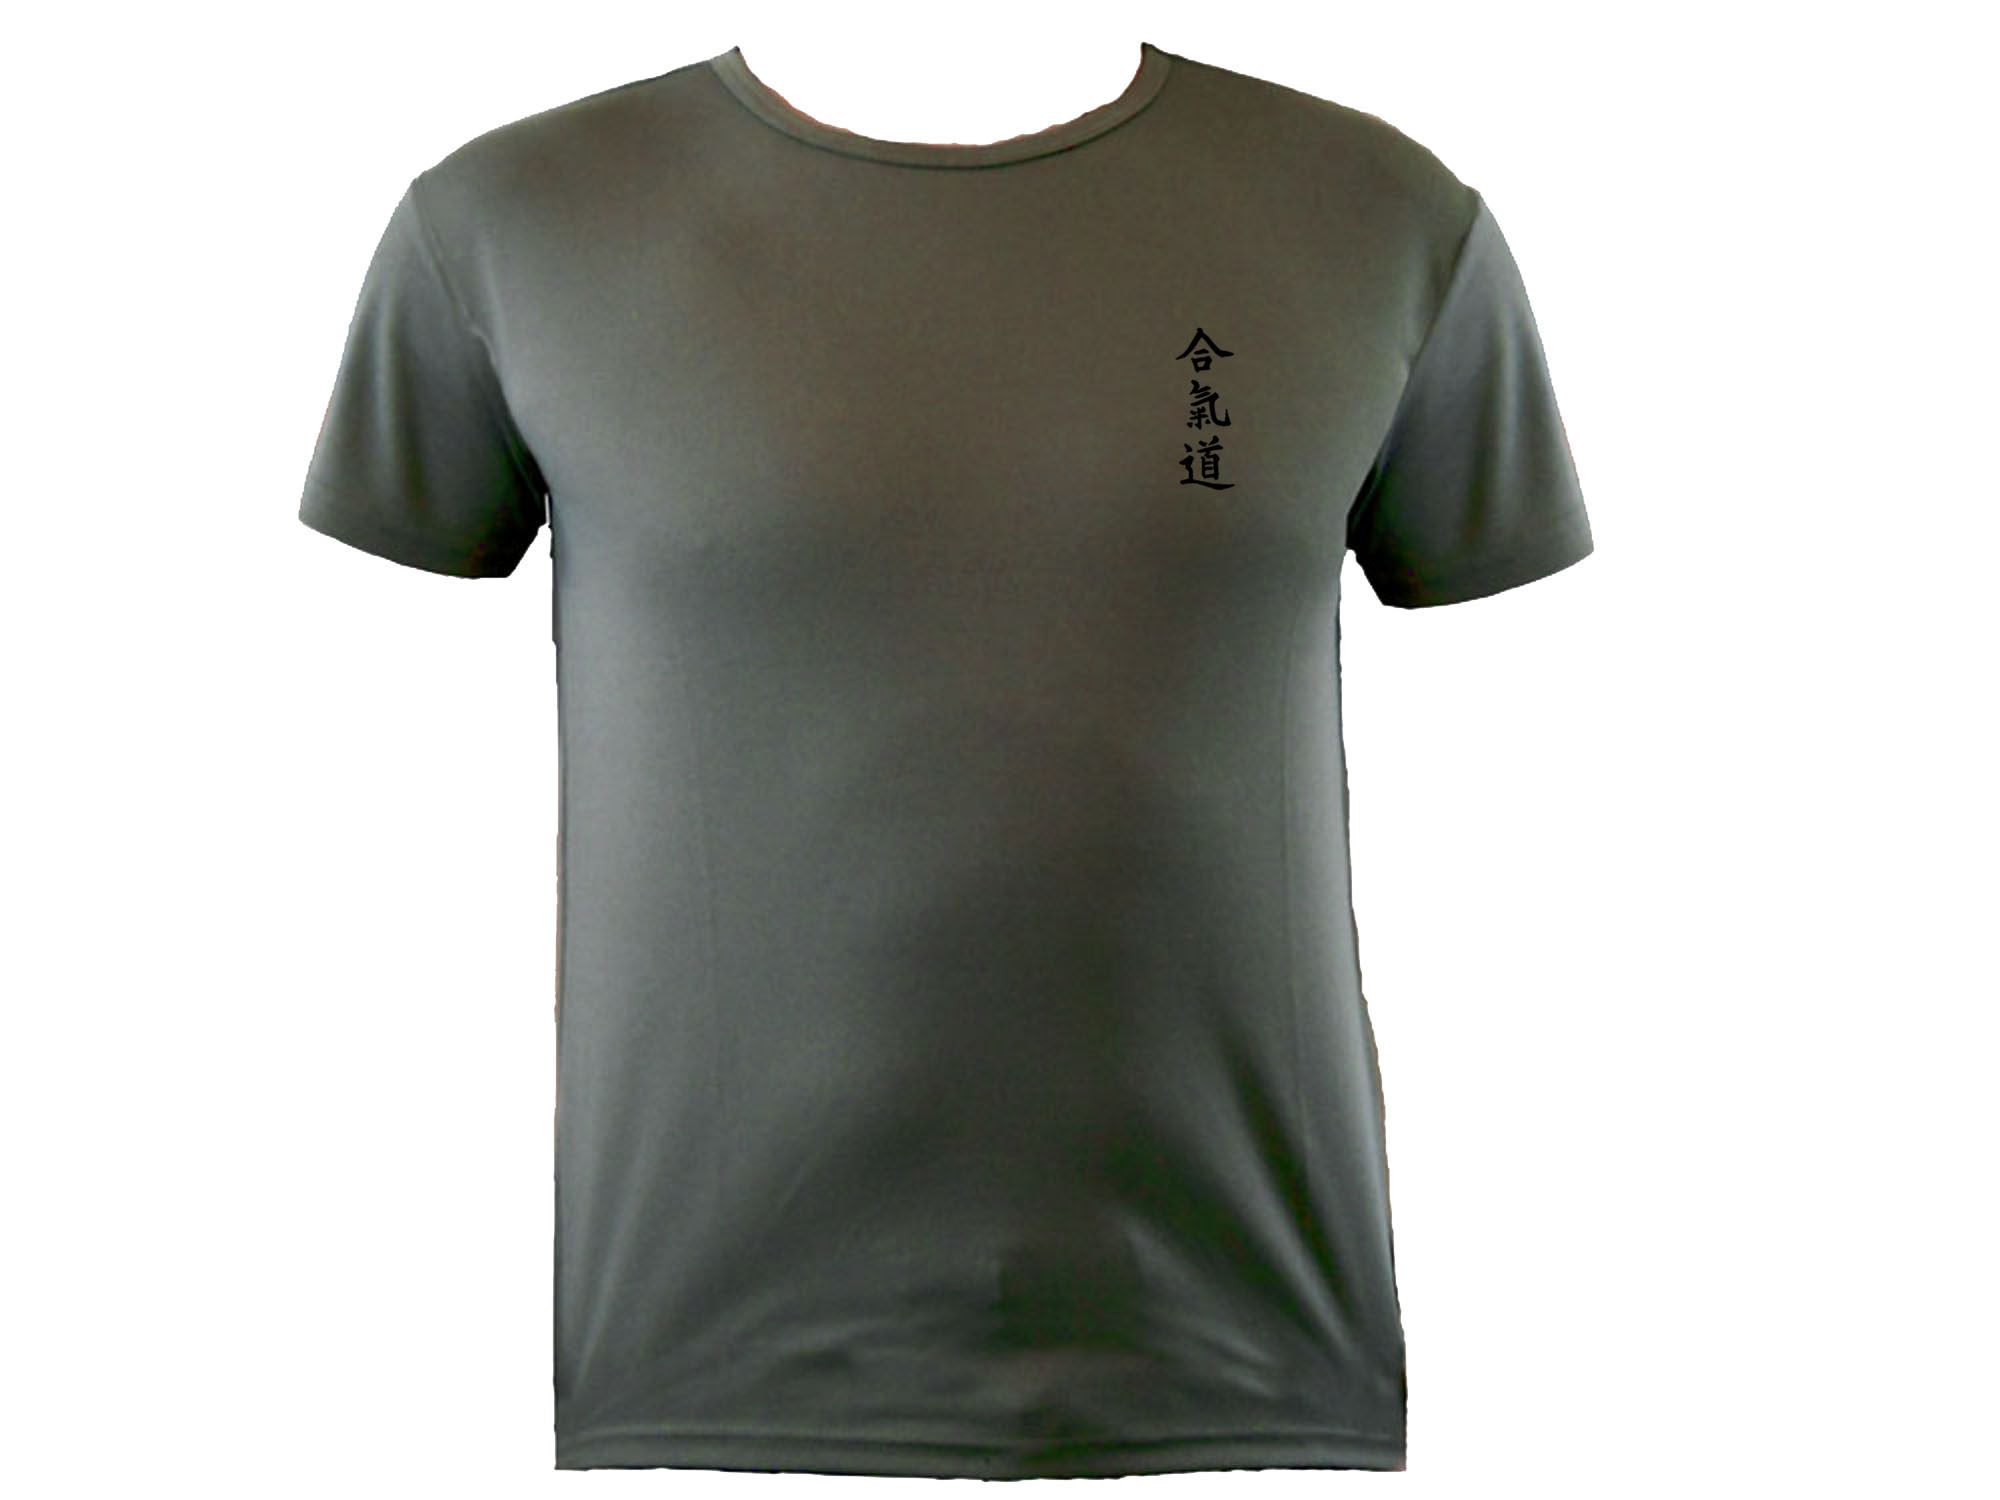 Aikido moisture wicking dri fit fabric workout running t-shirt